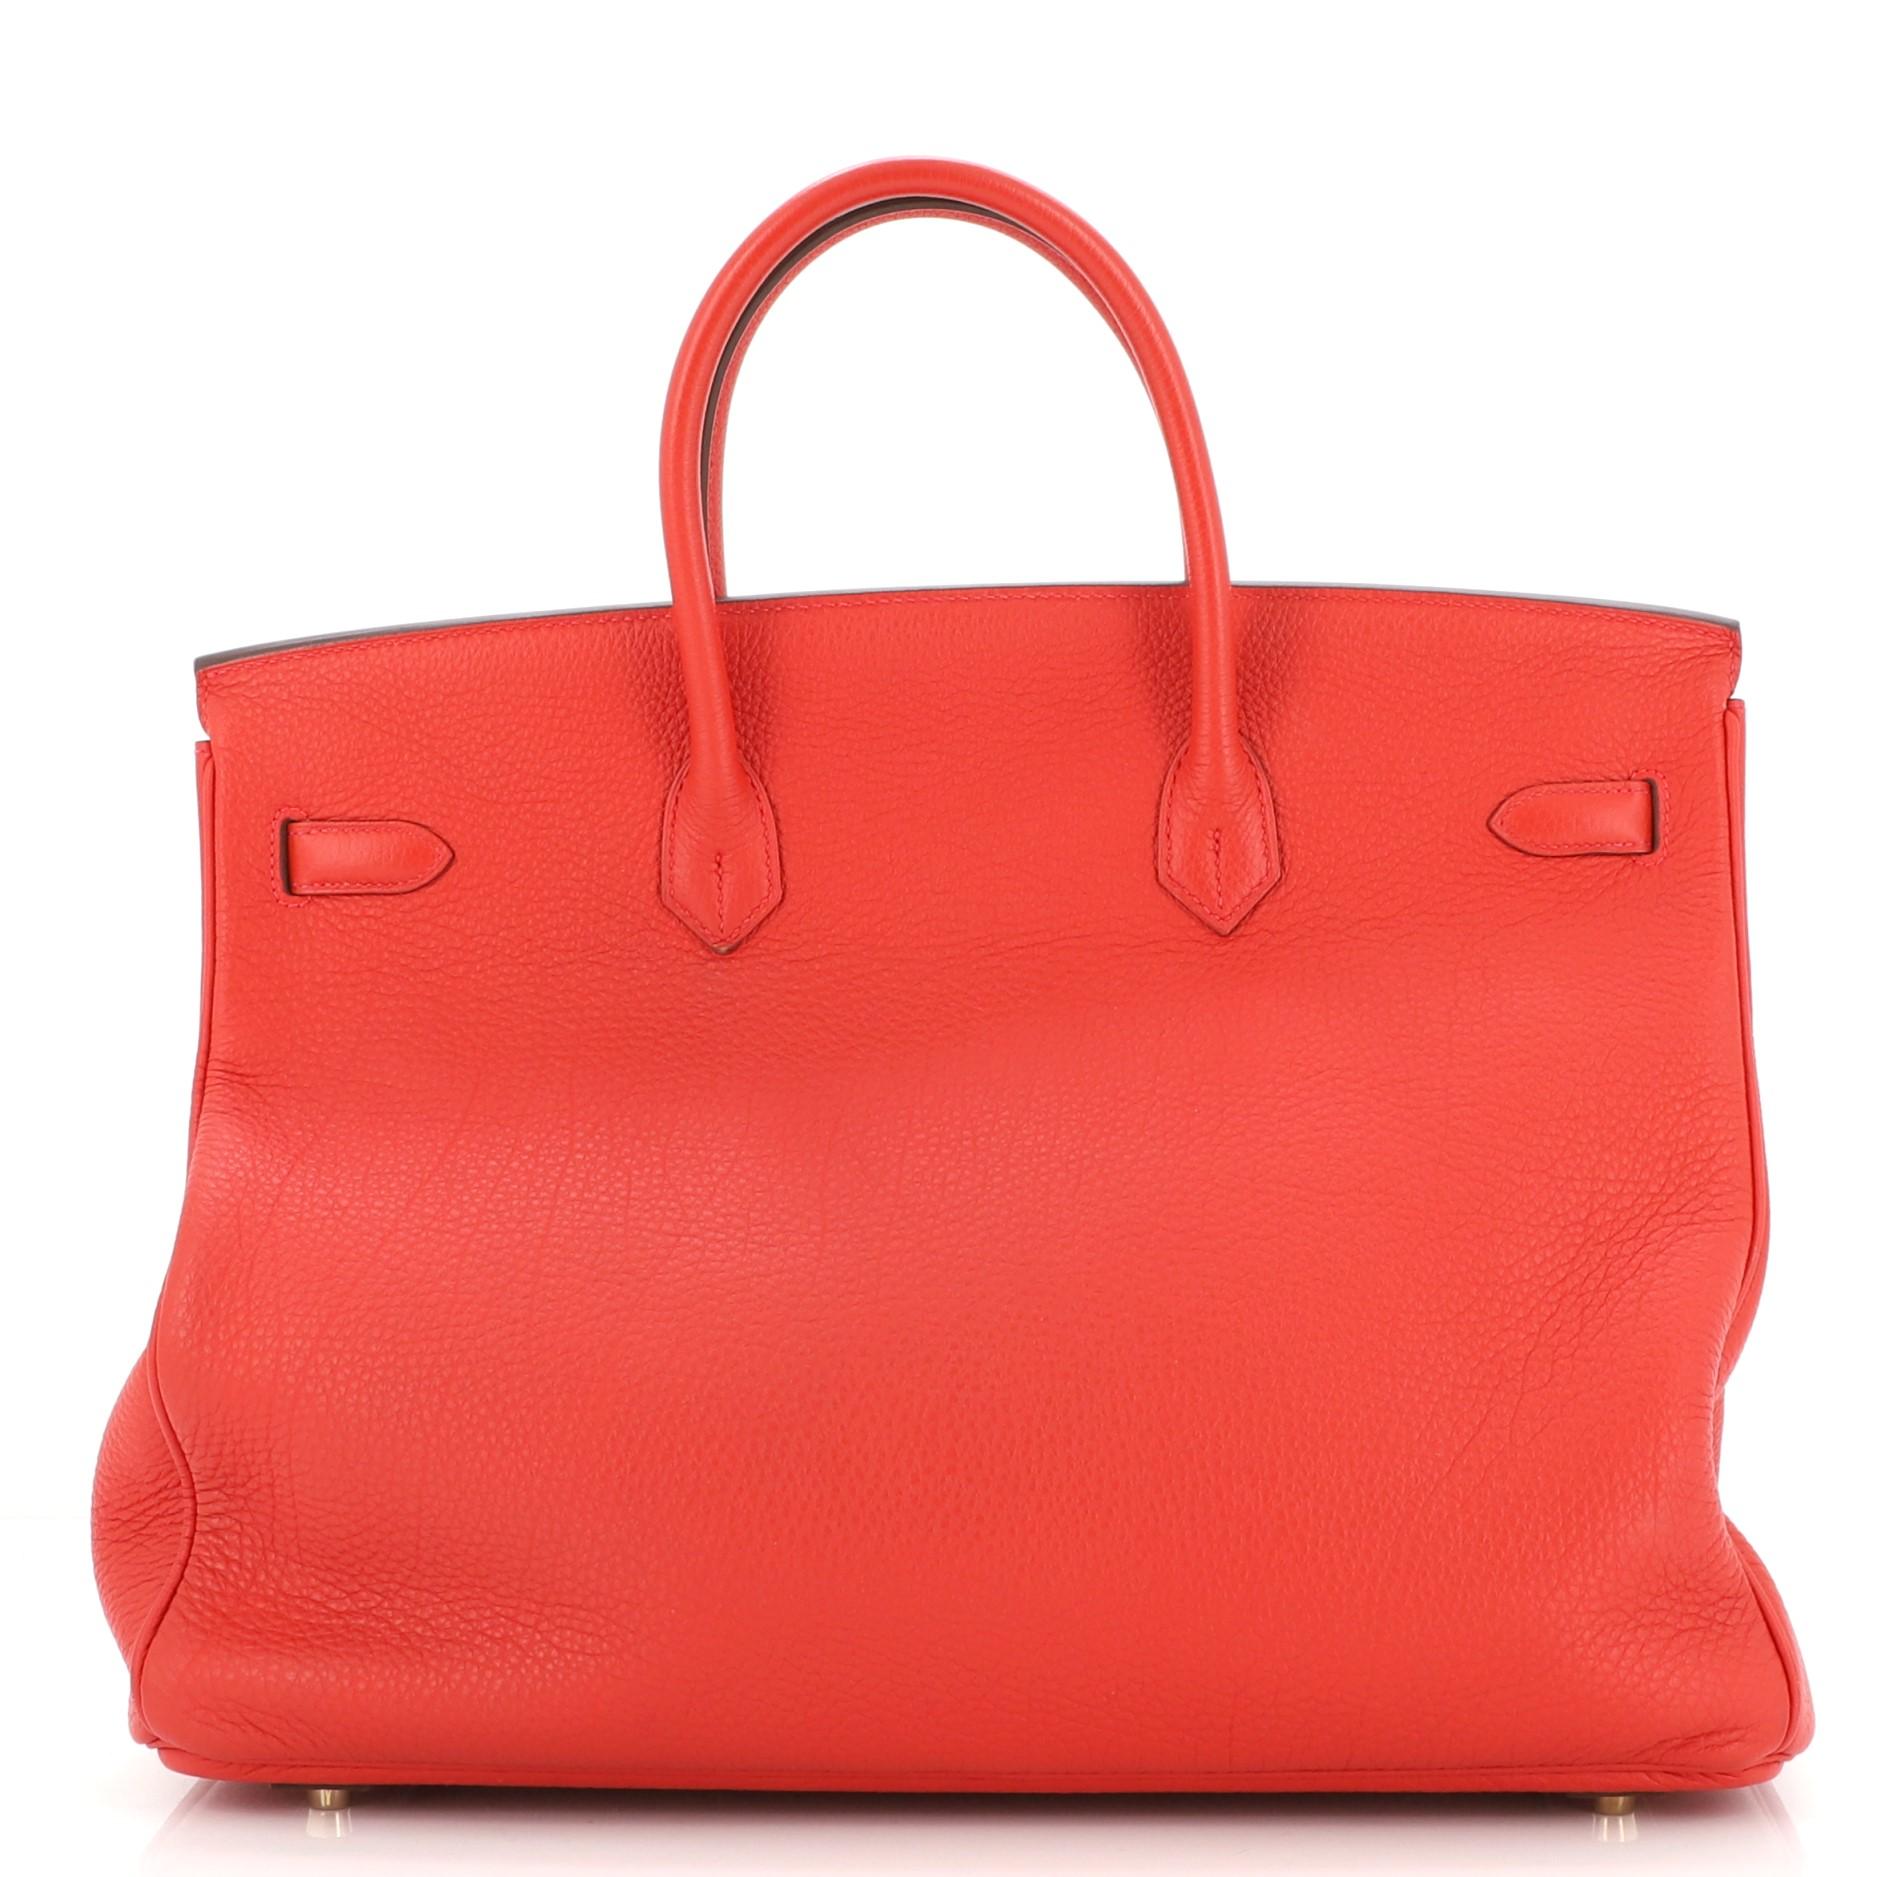 Red Hermes Birkin Handbag Vermillon Togo with Gold Hardware 40